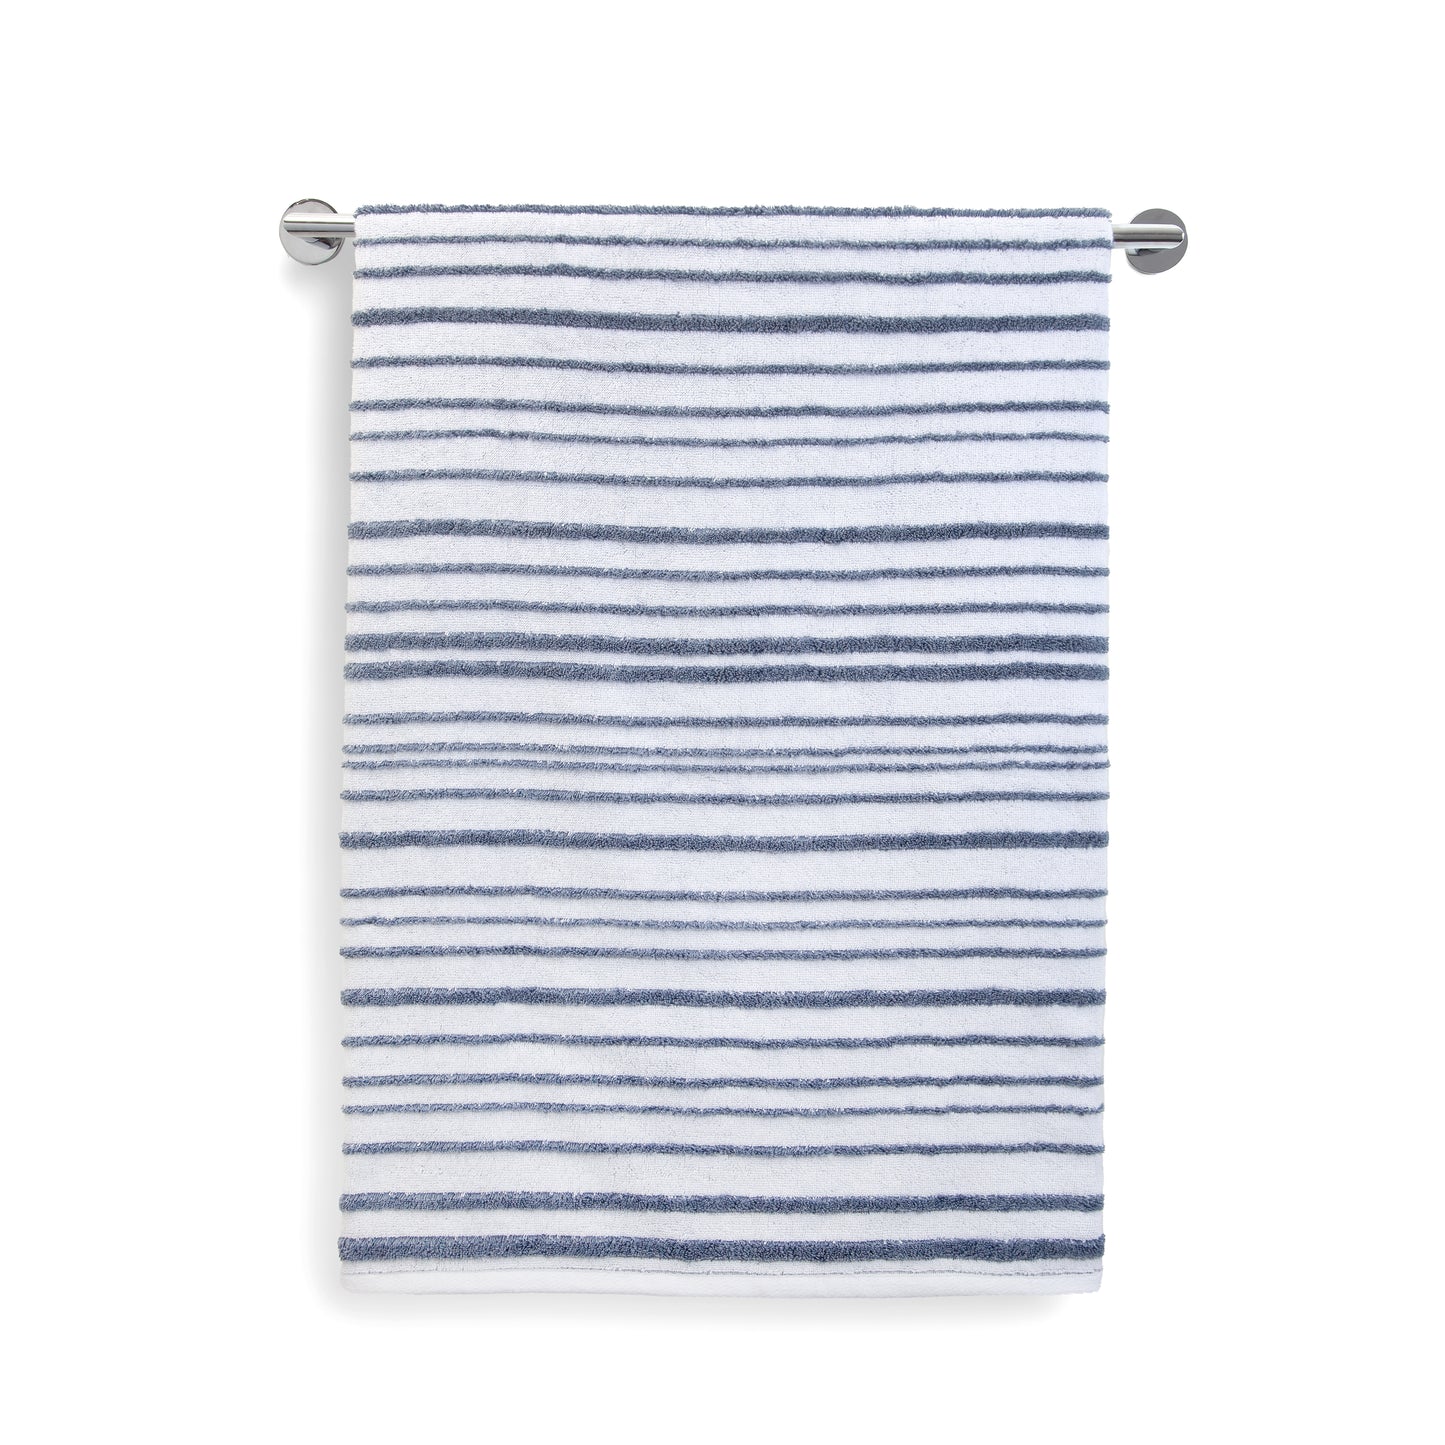 Halo Stripe Bath Towels